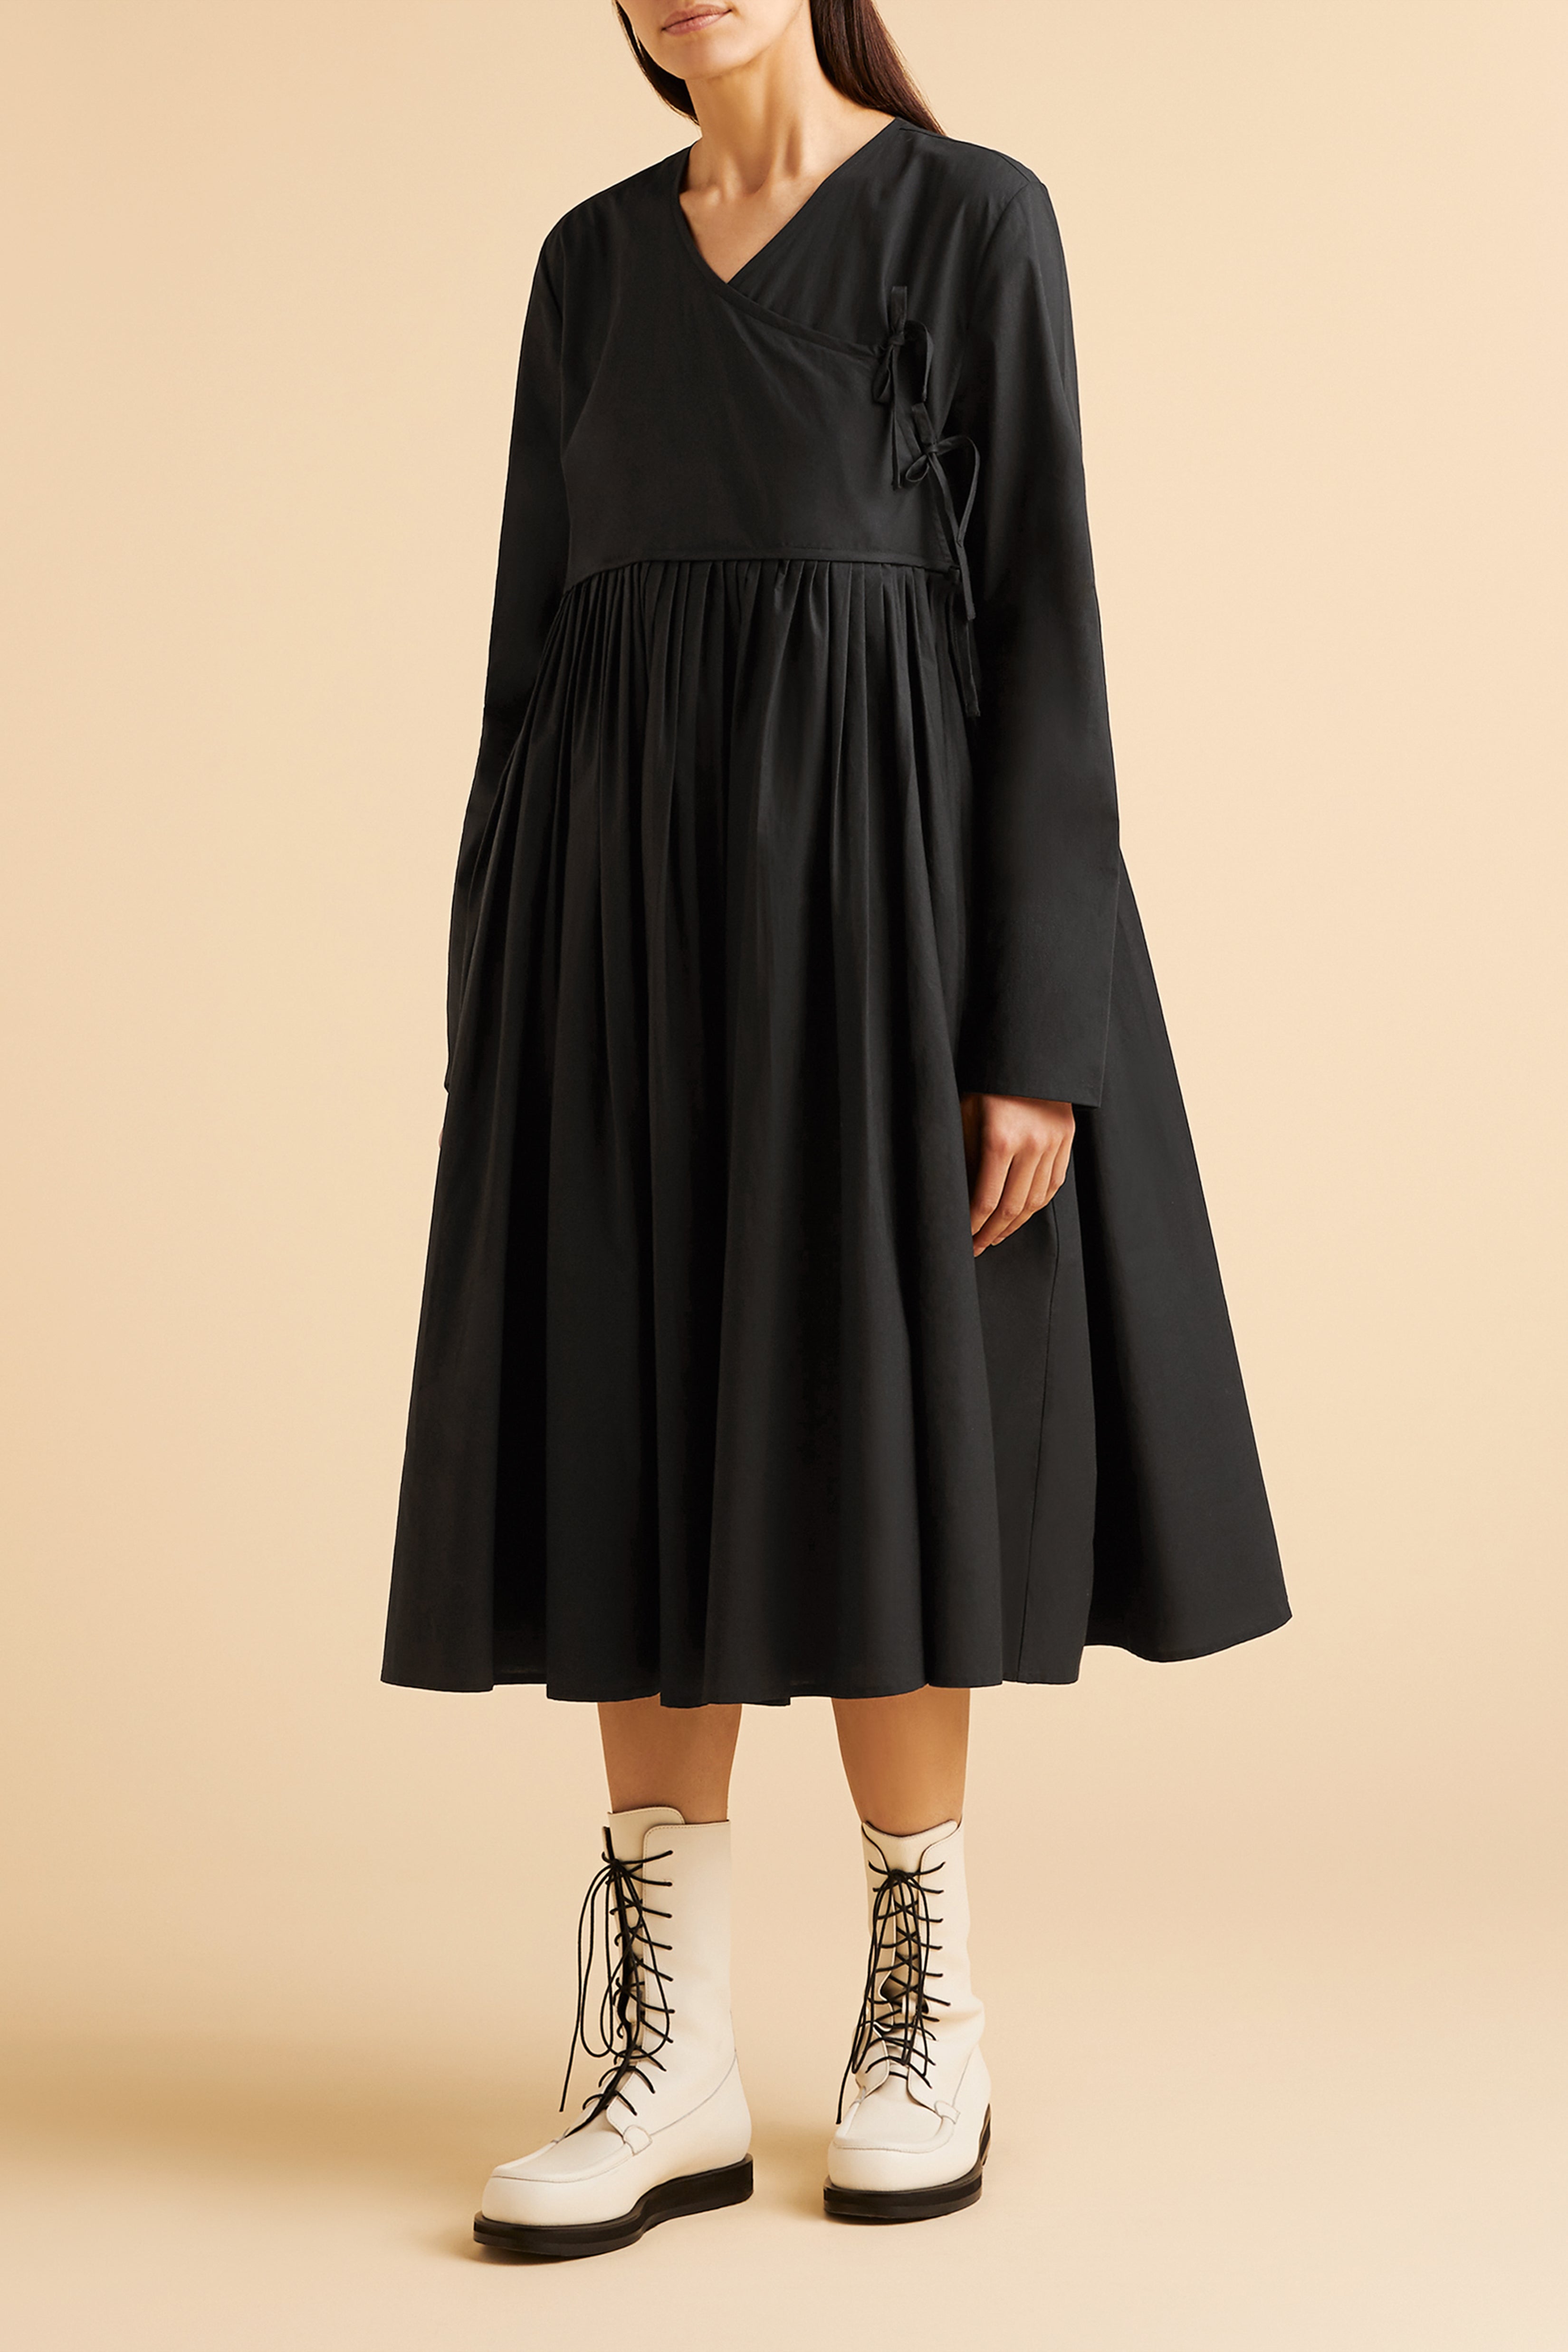 Shop Merlette Dresses: Tiered, Cotton, White, Black Dresses for Spring